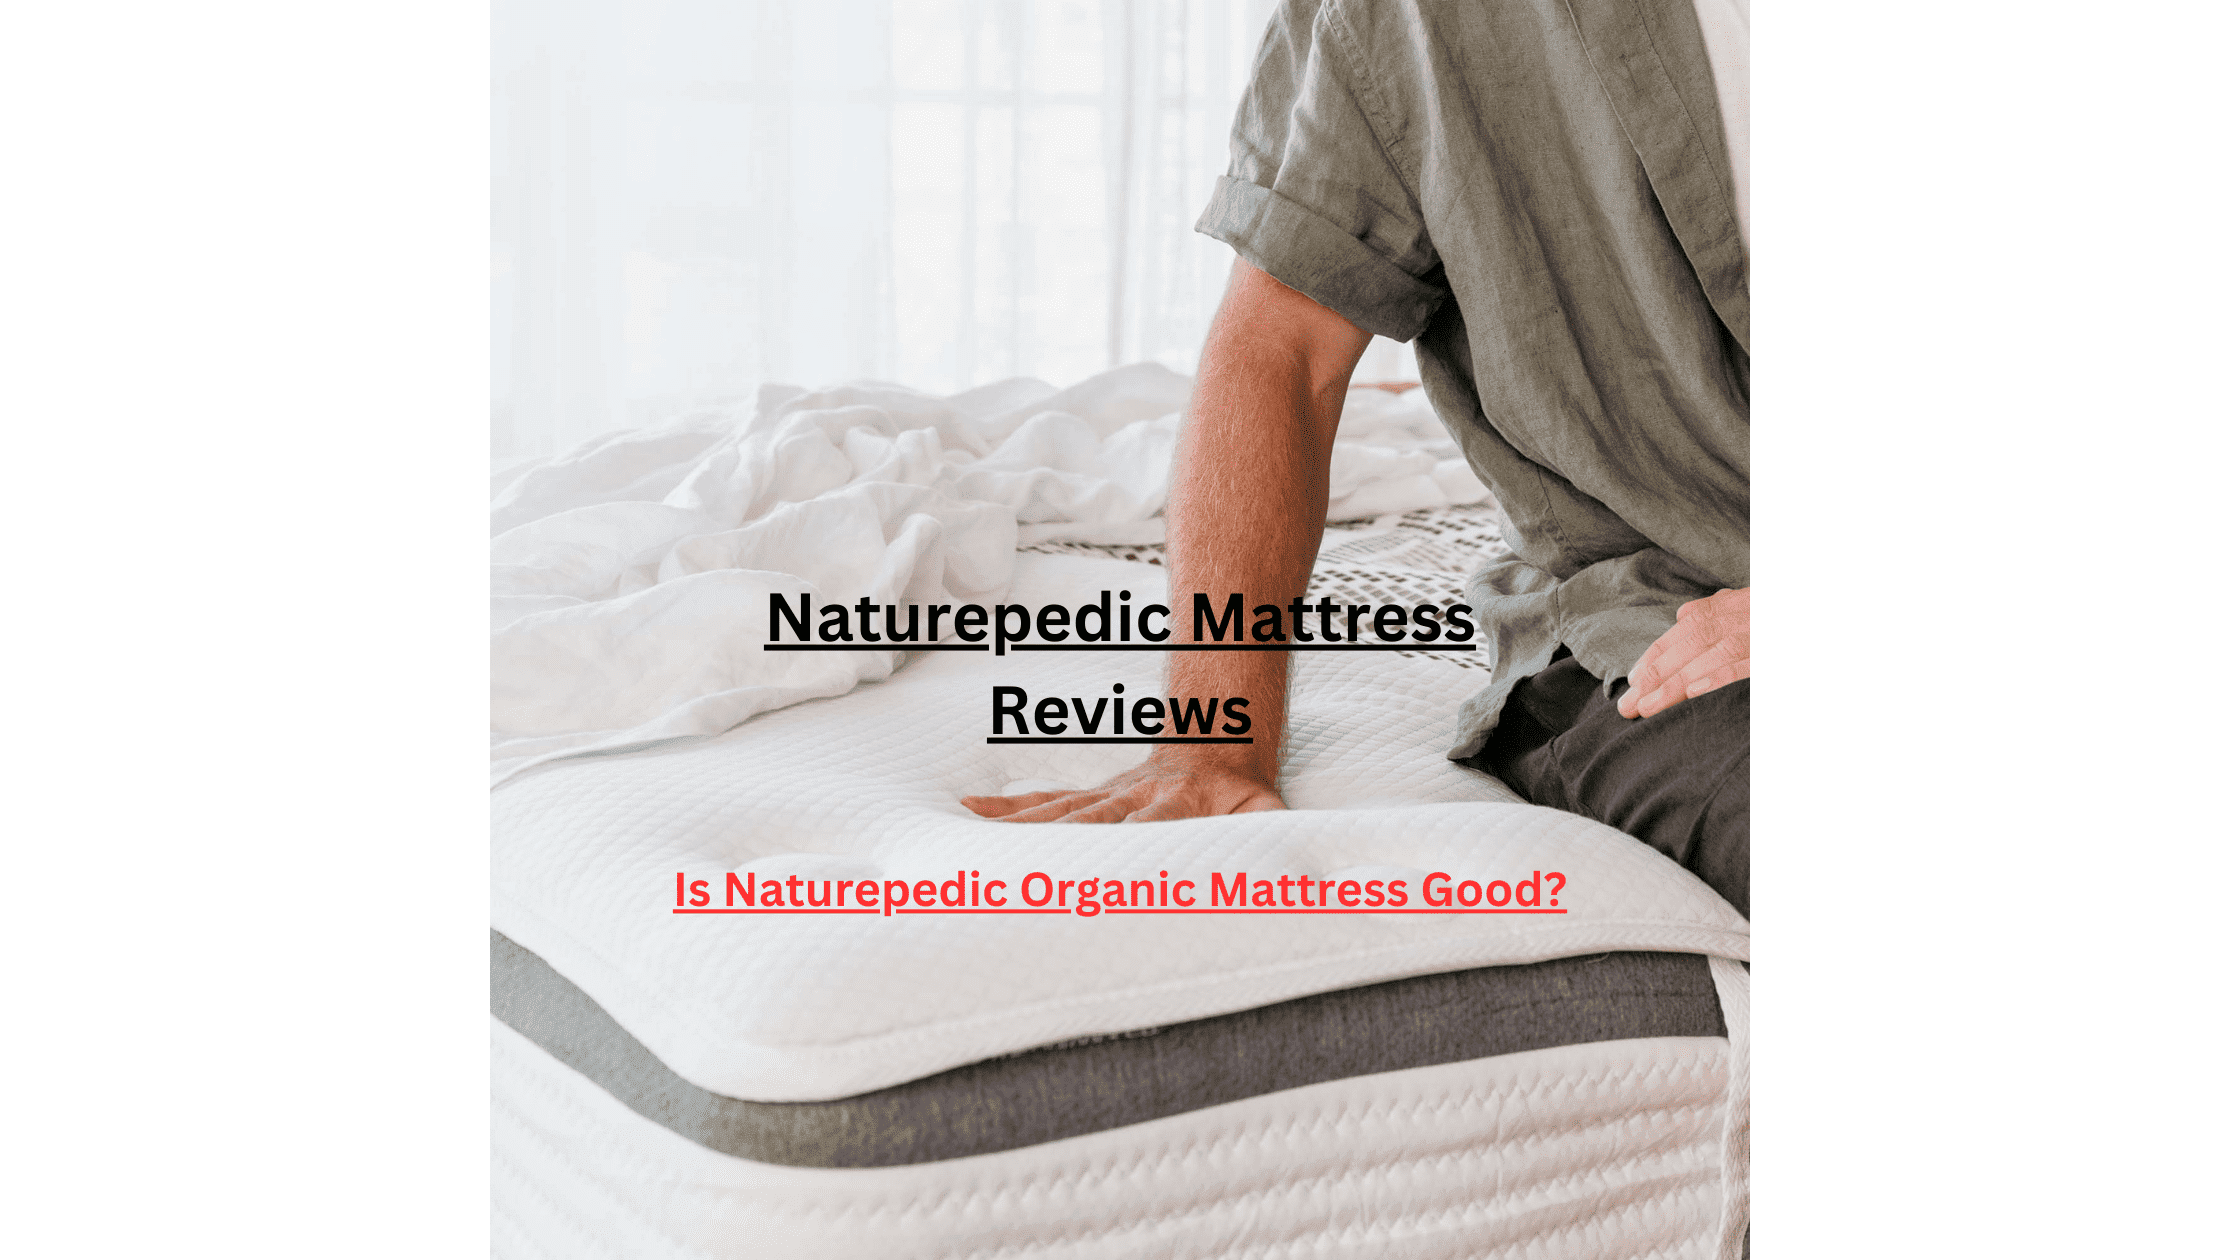 Naturepedic Mattress Reviews-Is Naturepedic Organic Mattress Good?